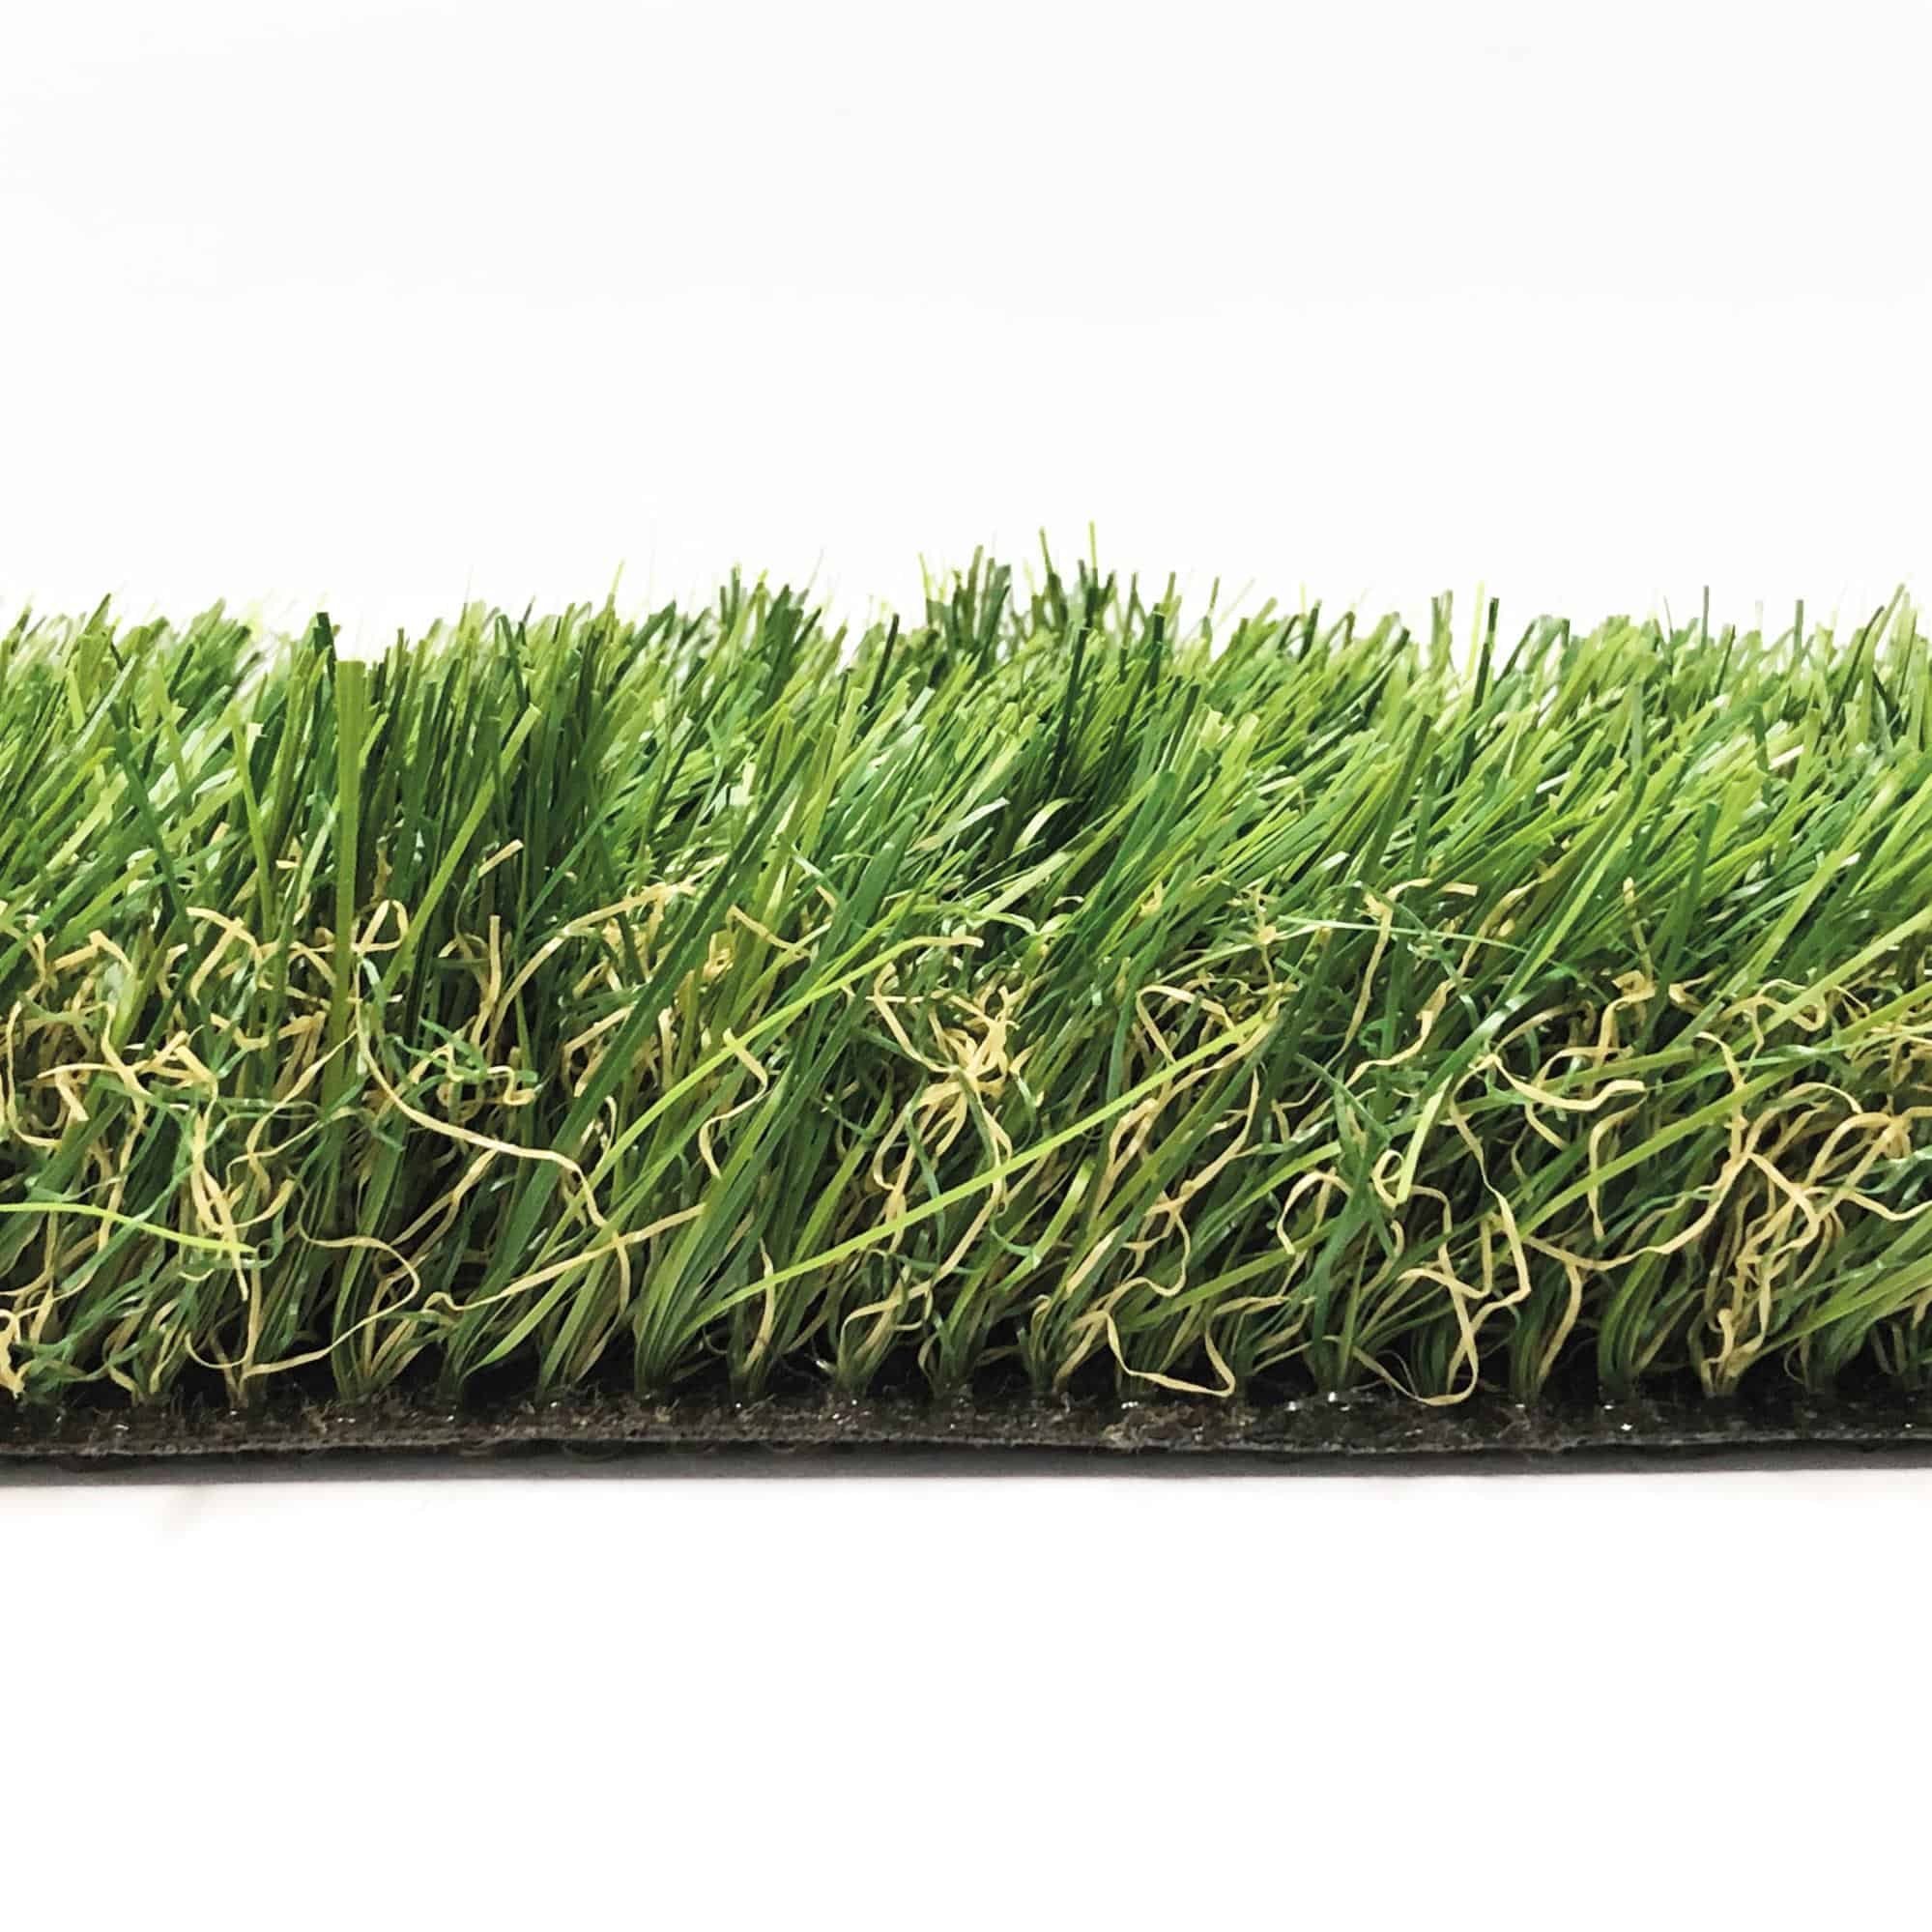 CORE Lawn Natural Artificial Grass 2 m 1m